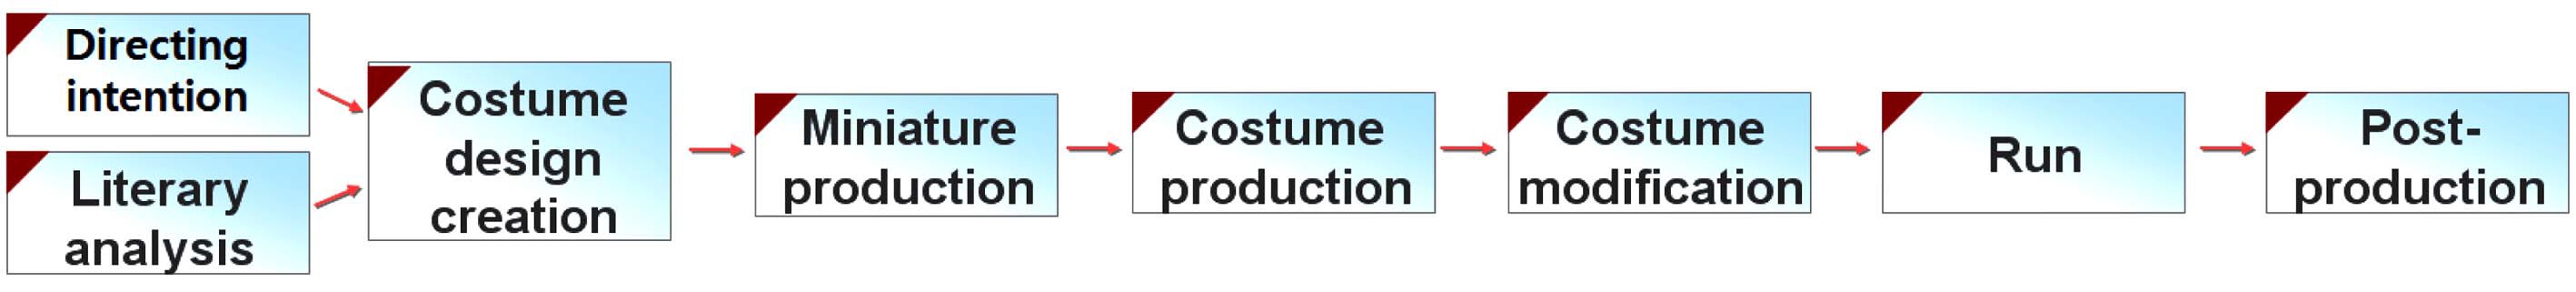 Costume production process.